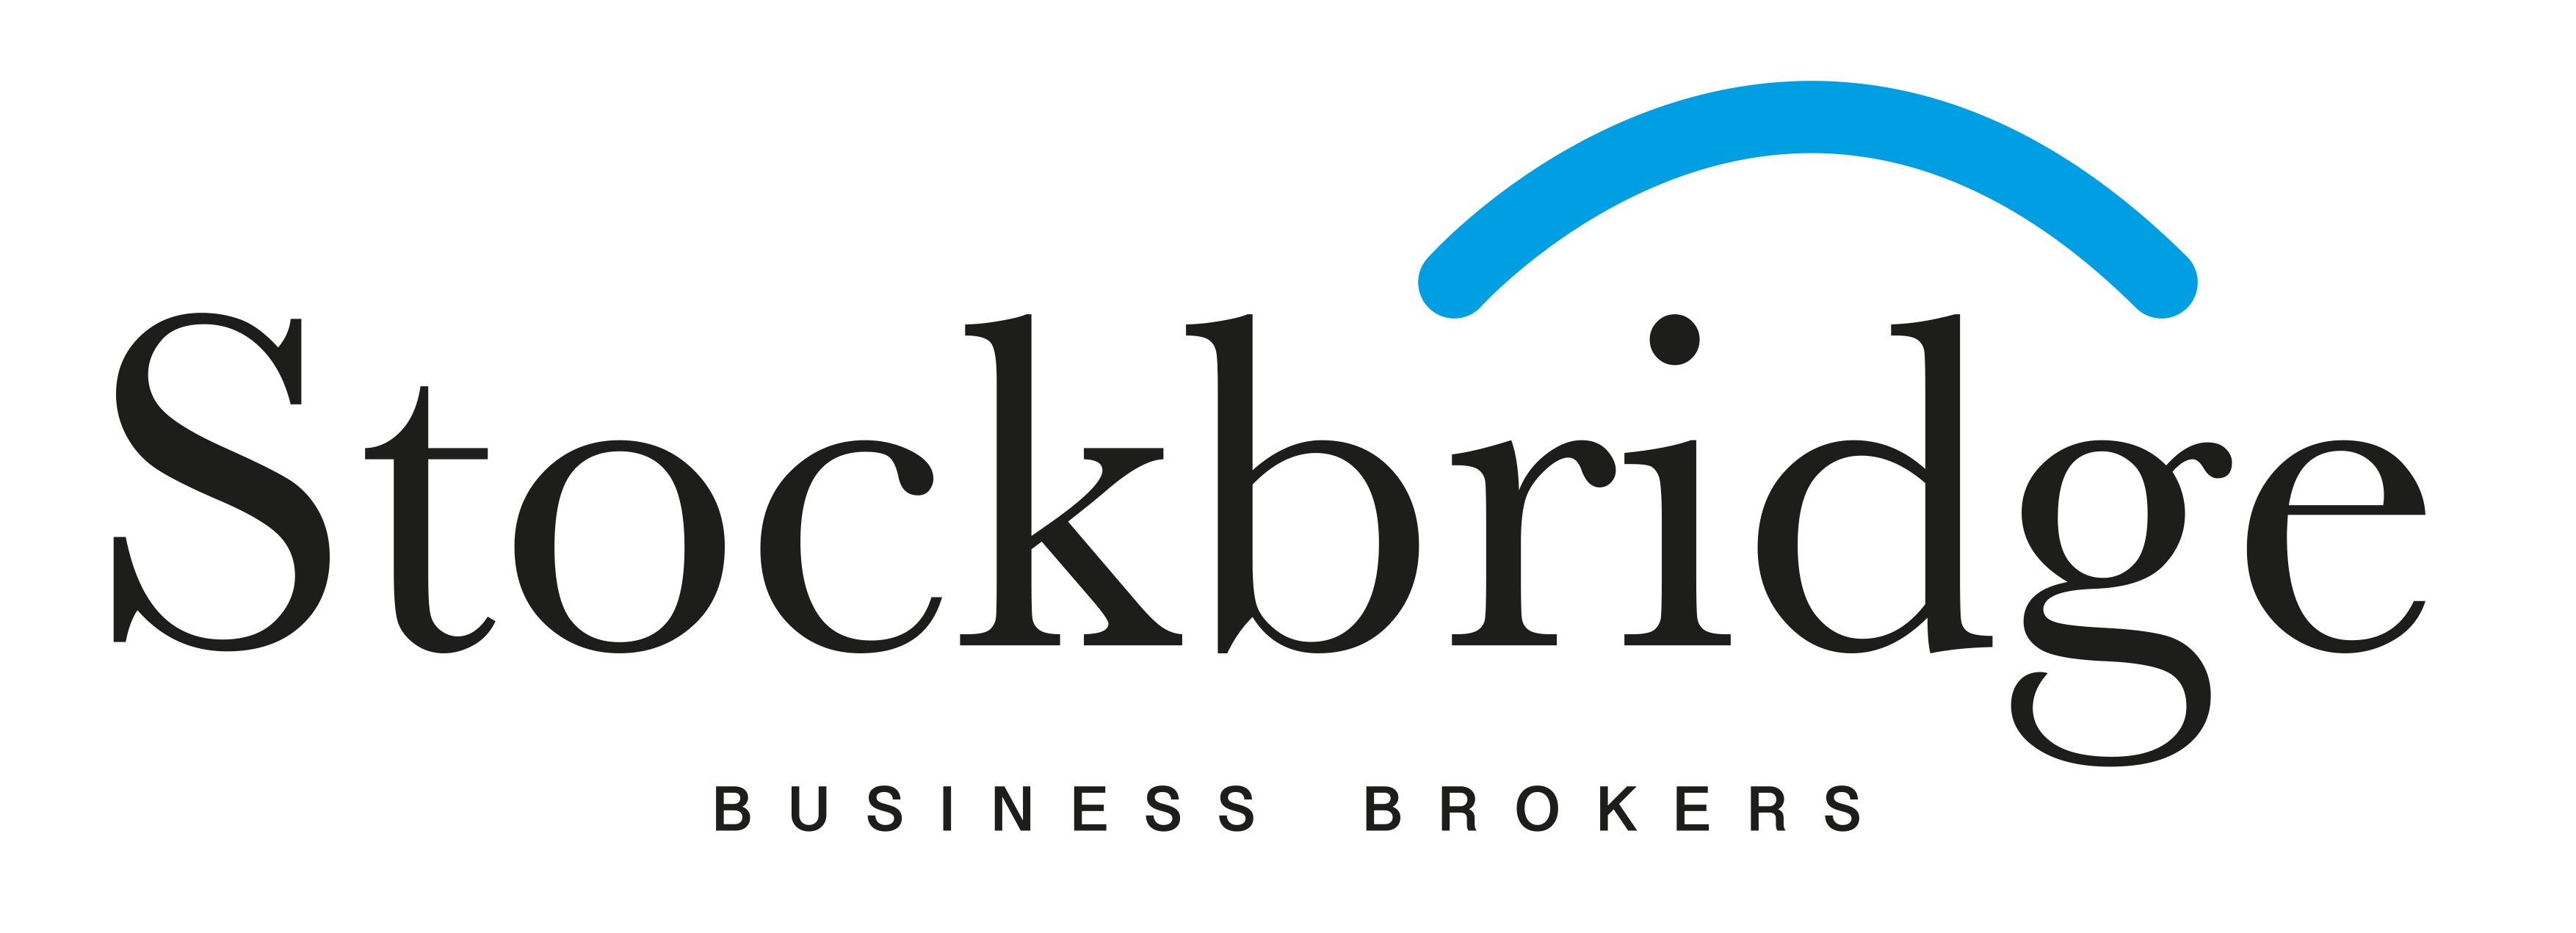 Stockbridge Business Brokers Brisbane - logo